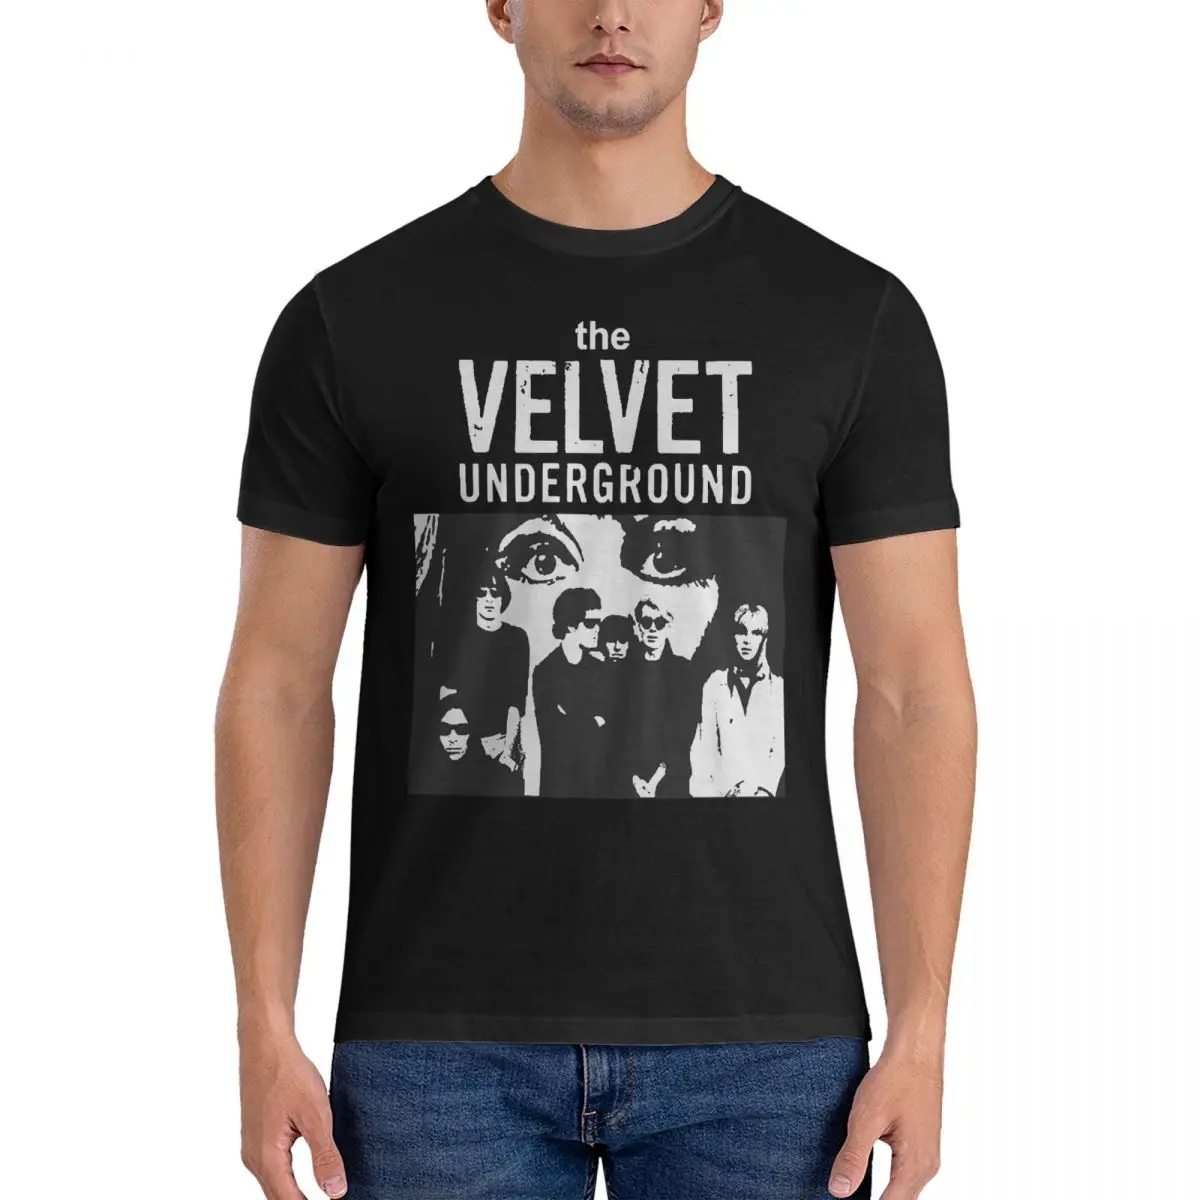 

The Velvet Andy Warhol Nico Fan T-Shirts for Men The Velvet Underground Unique Cotton Tee Shirt Crewneck Short Sleeve T Shirt